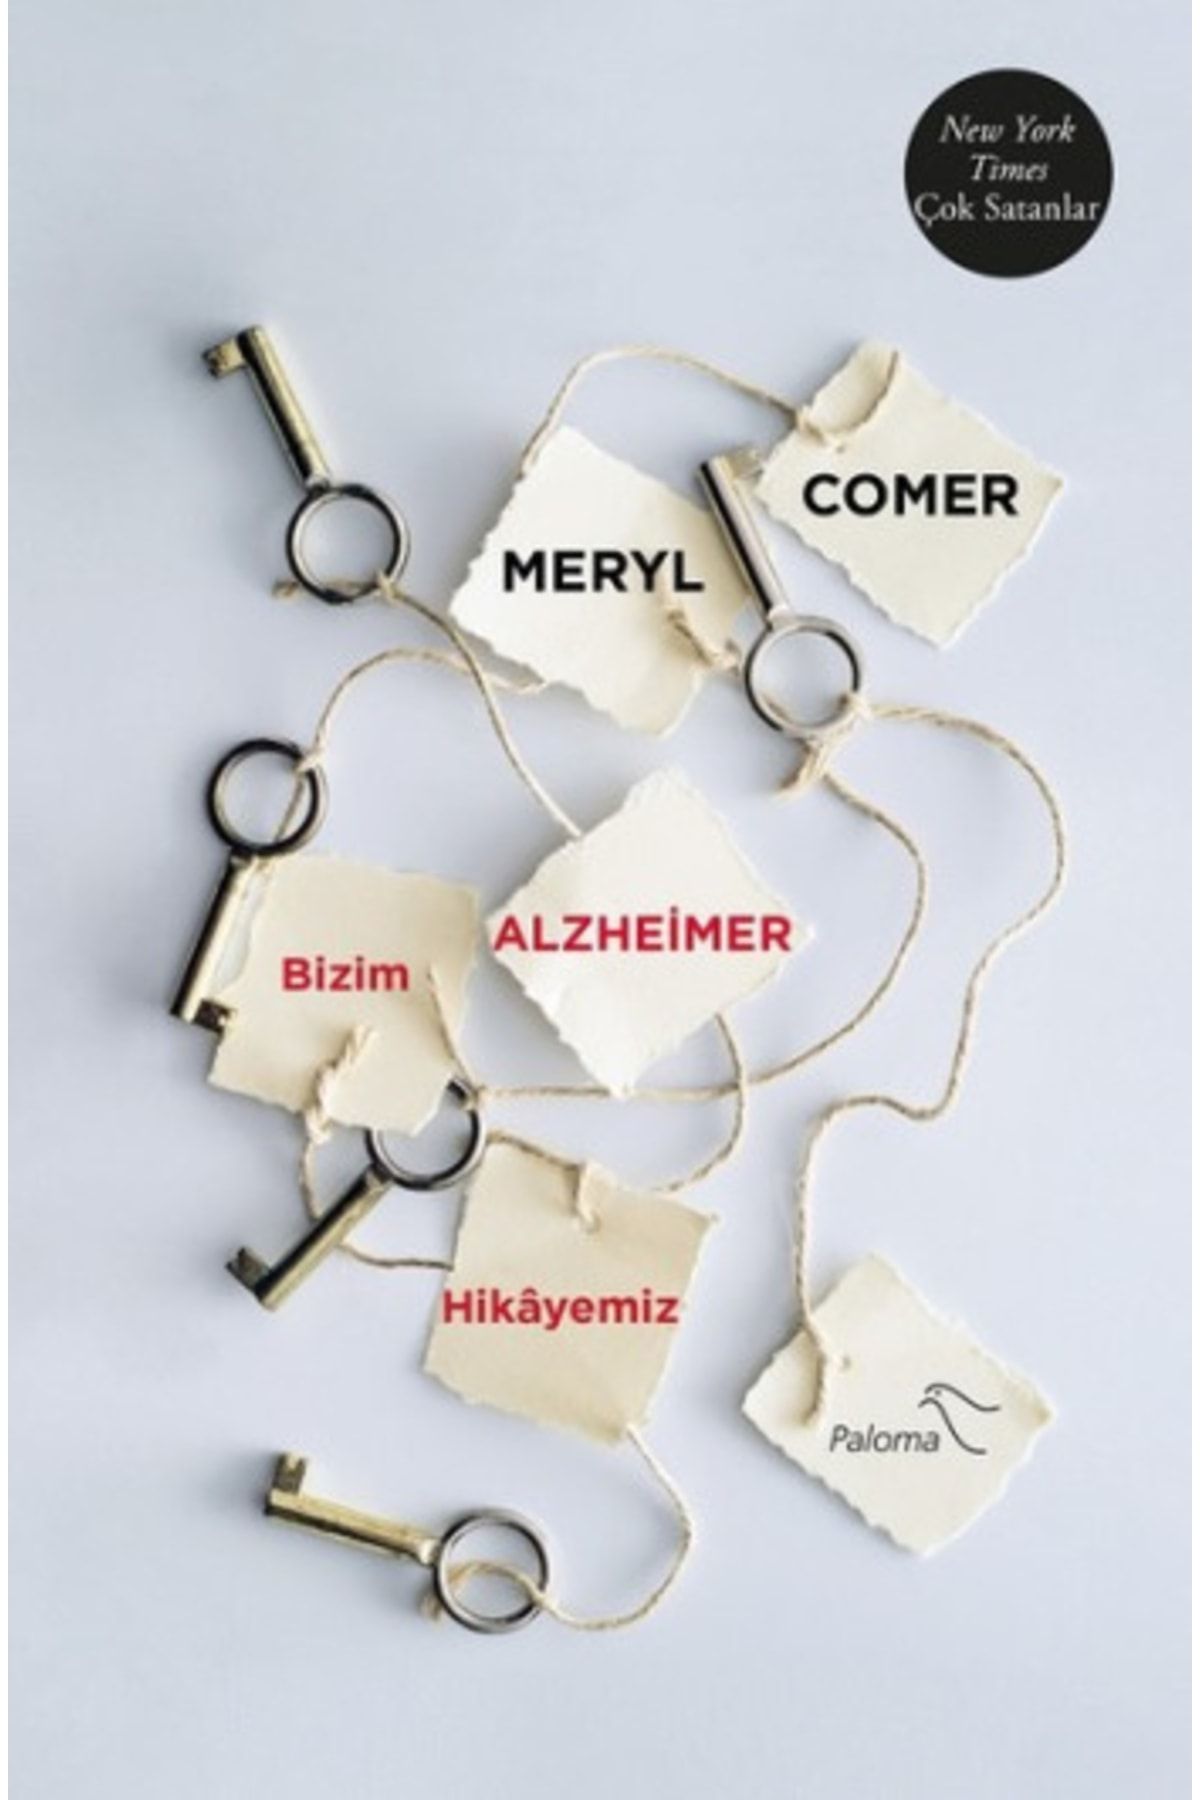 Paloma Yayınevi Bizim Alzheimer Hikayemiz, Meryl Comer, , Bizim Alzheimer Hikayemiz Kitabı, 216 Sayf